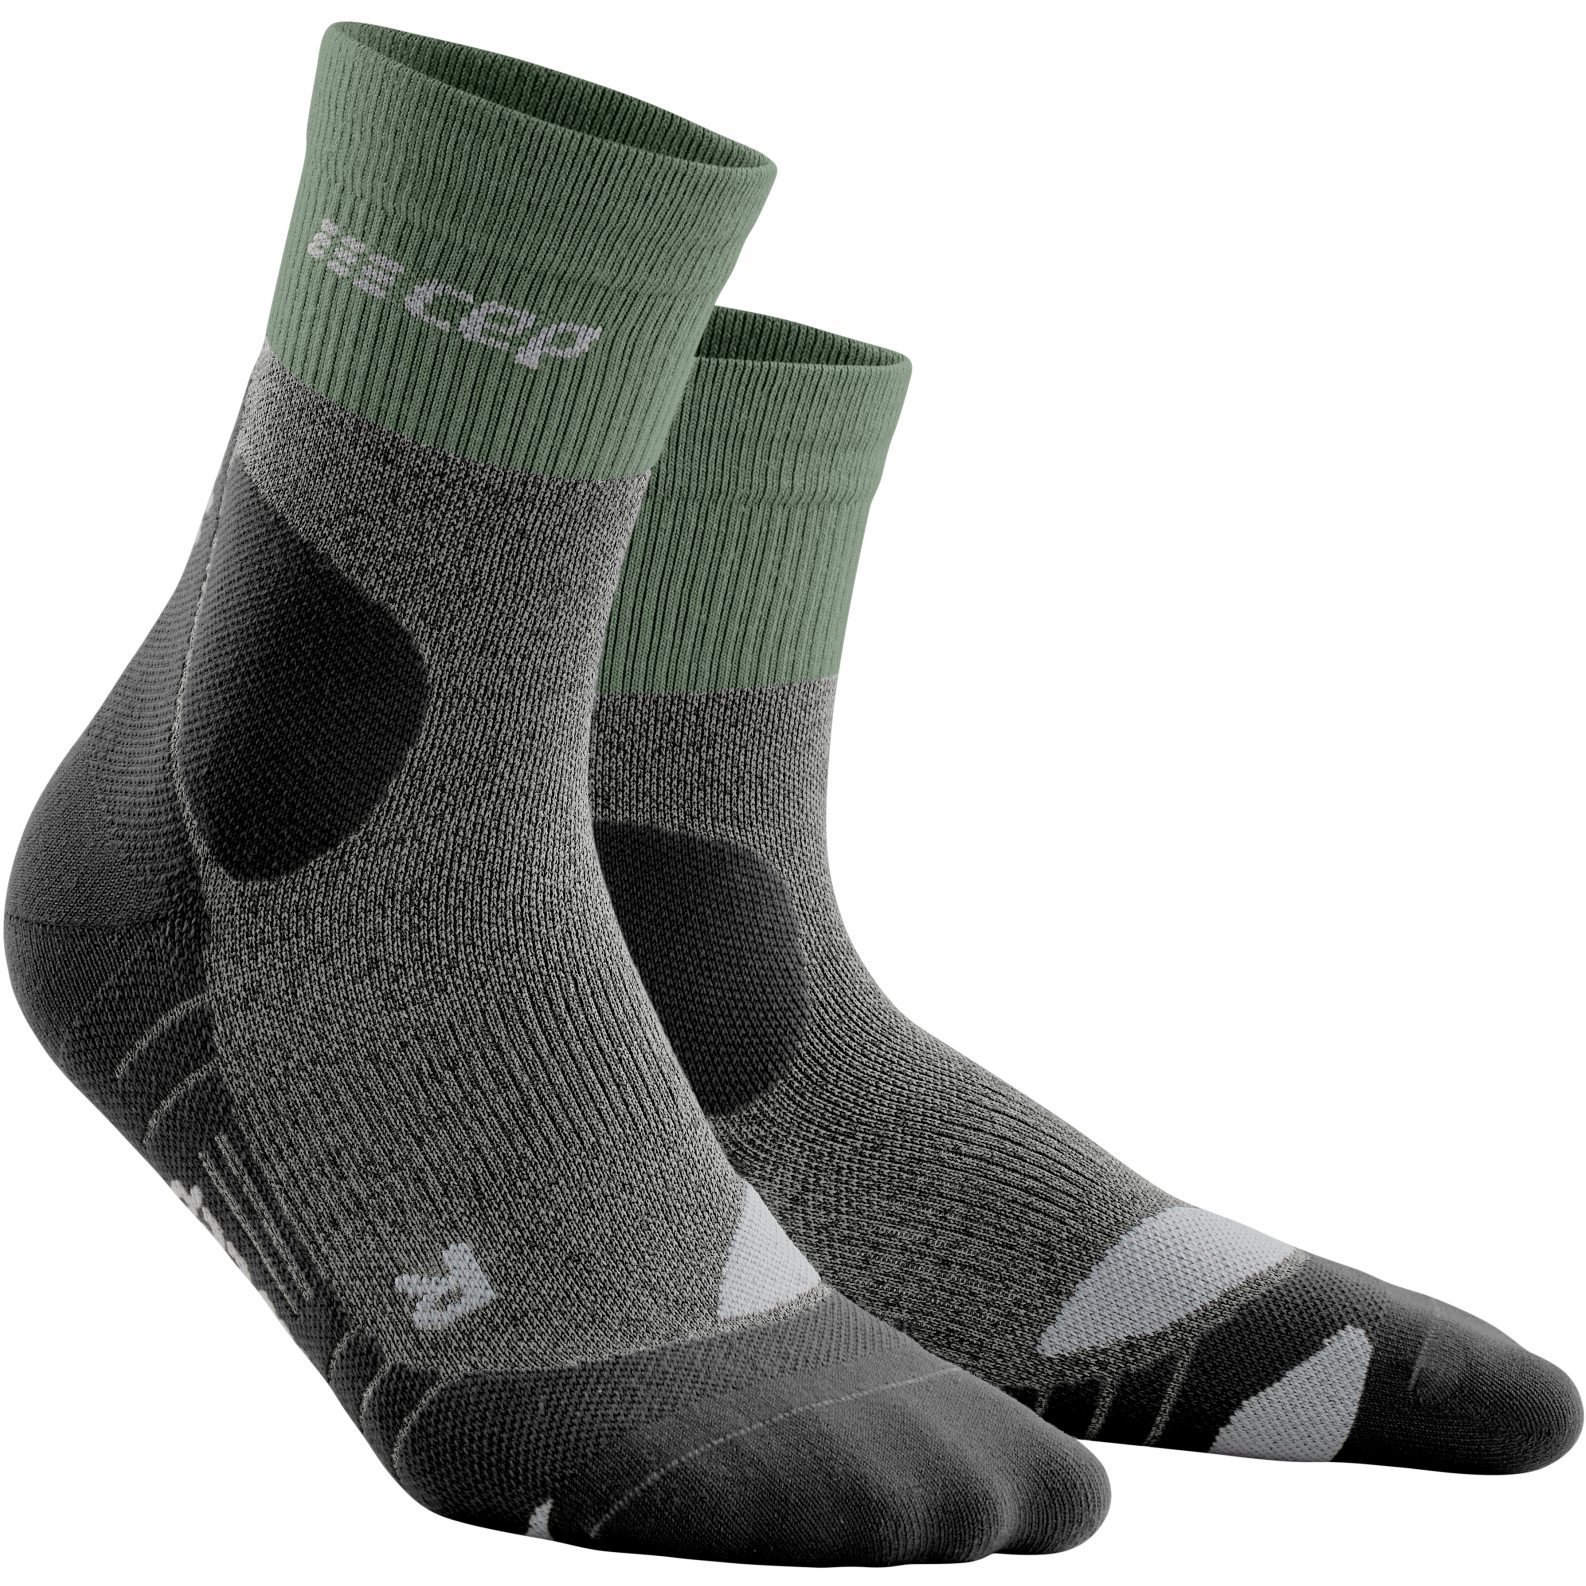 Picture of CEP Hiking Merino Mid Cut Compression Socks Men - green/light grey